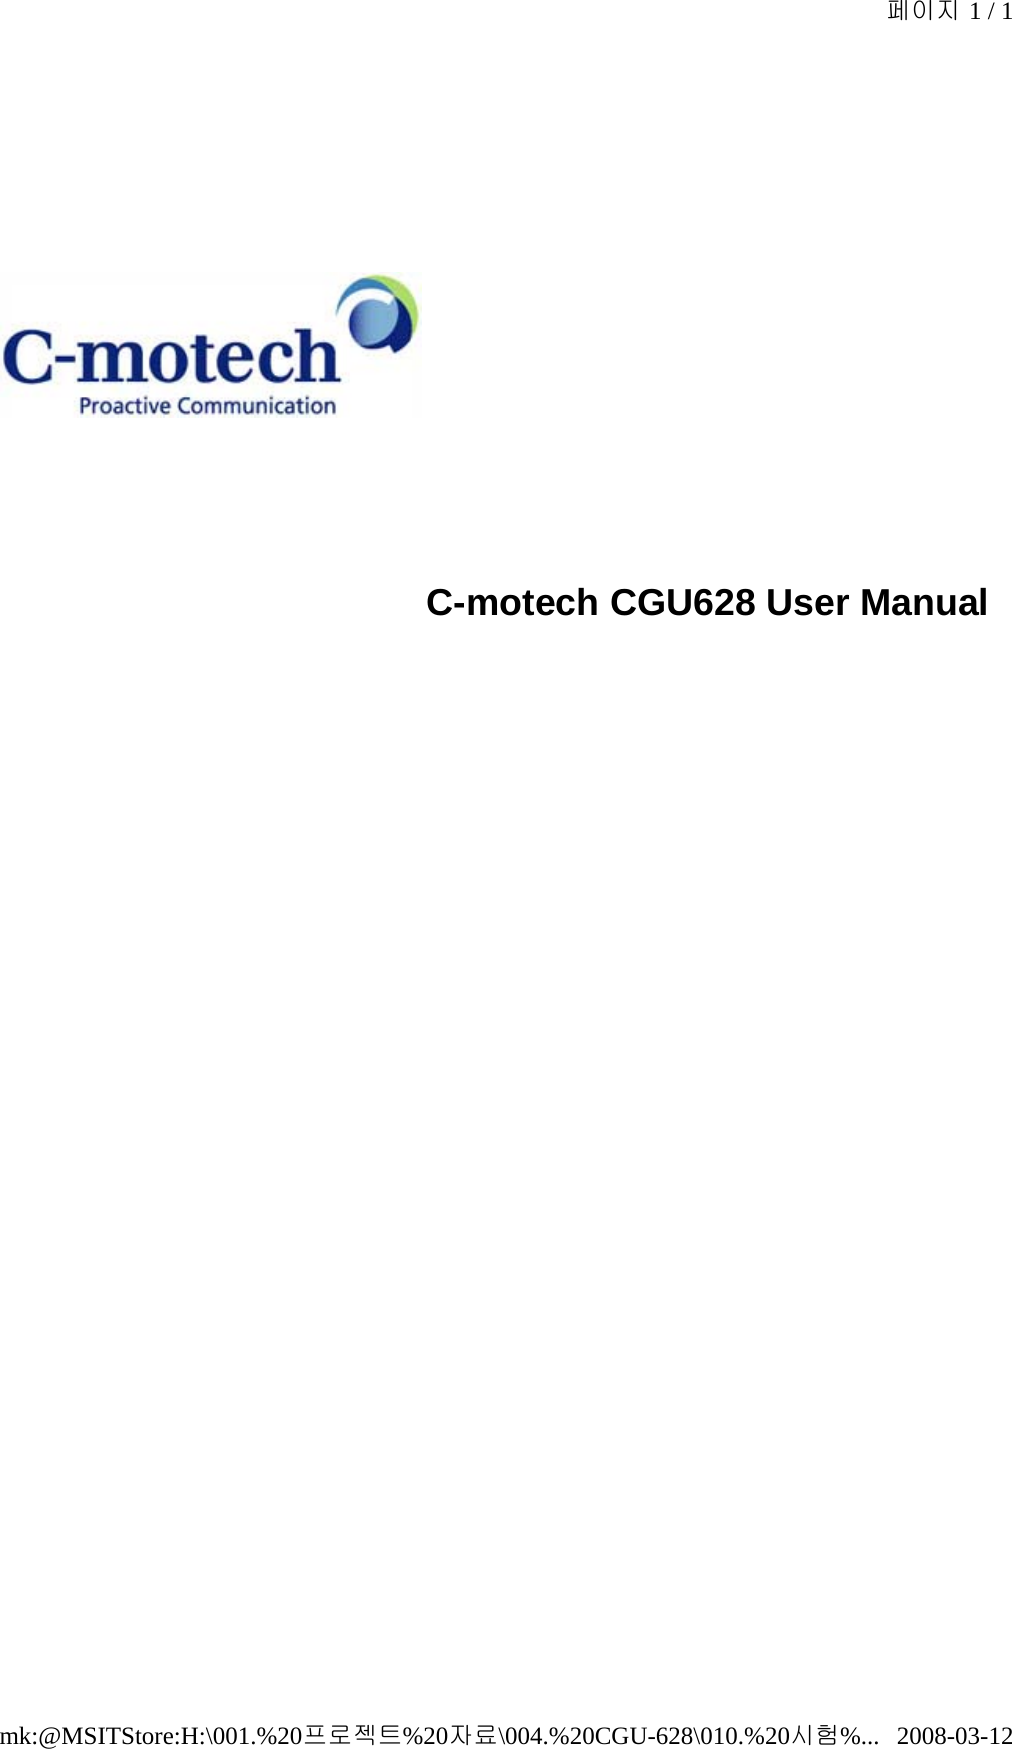                                                               C-motech CGU628 User Manual            페이지 1/ 12008-03-12mk:@MSITStore:H:\001.%20프로젝트%20자료\004.%20CGU-628\010.%20시험%...